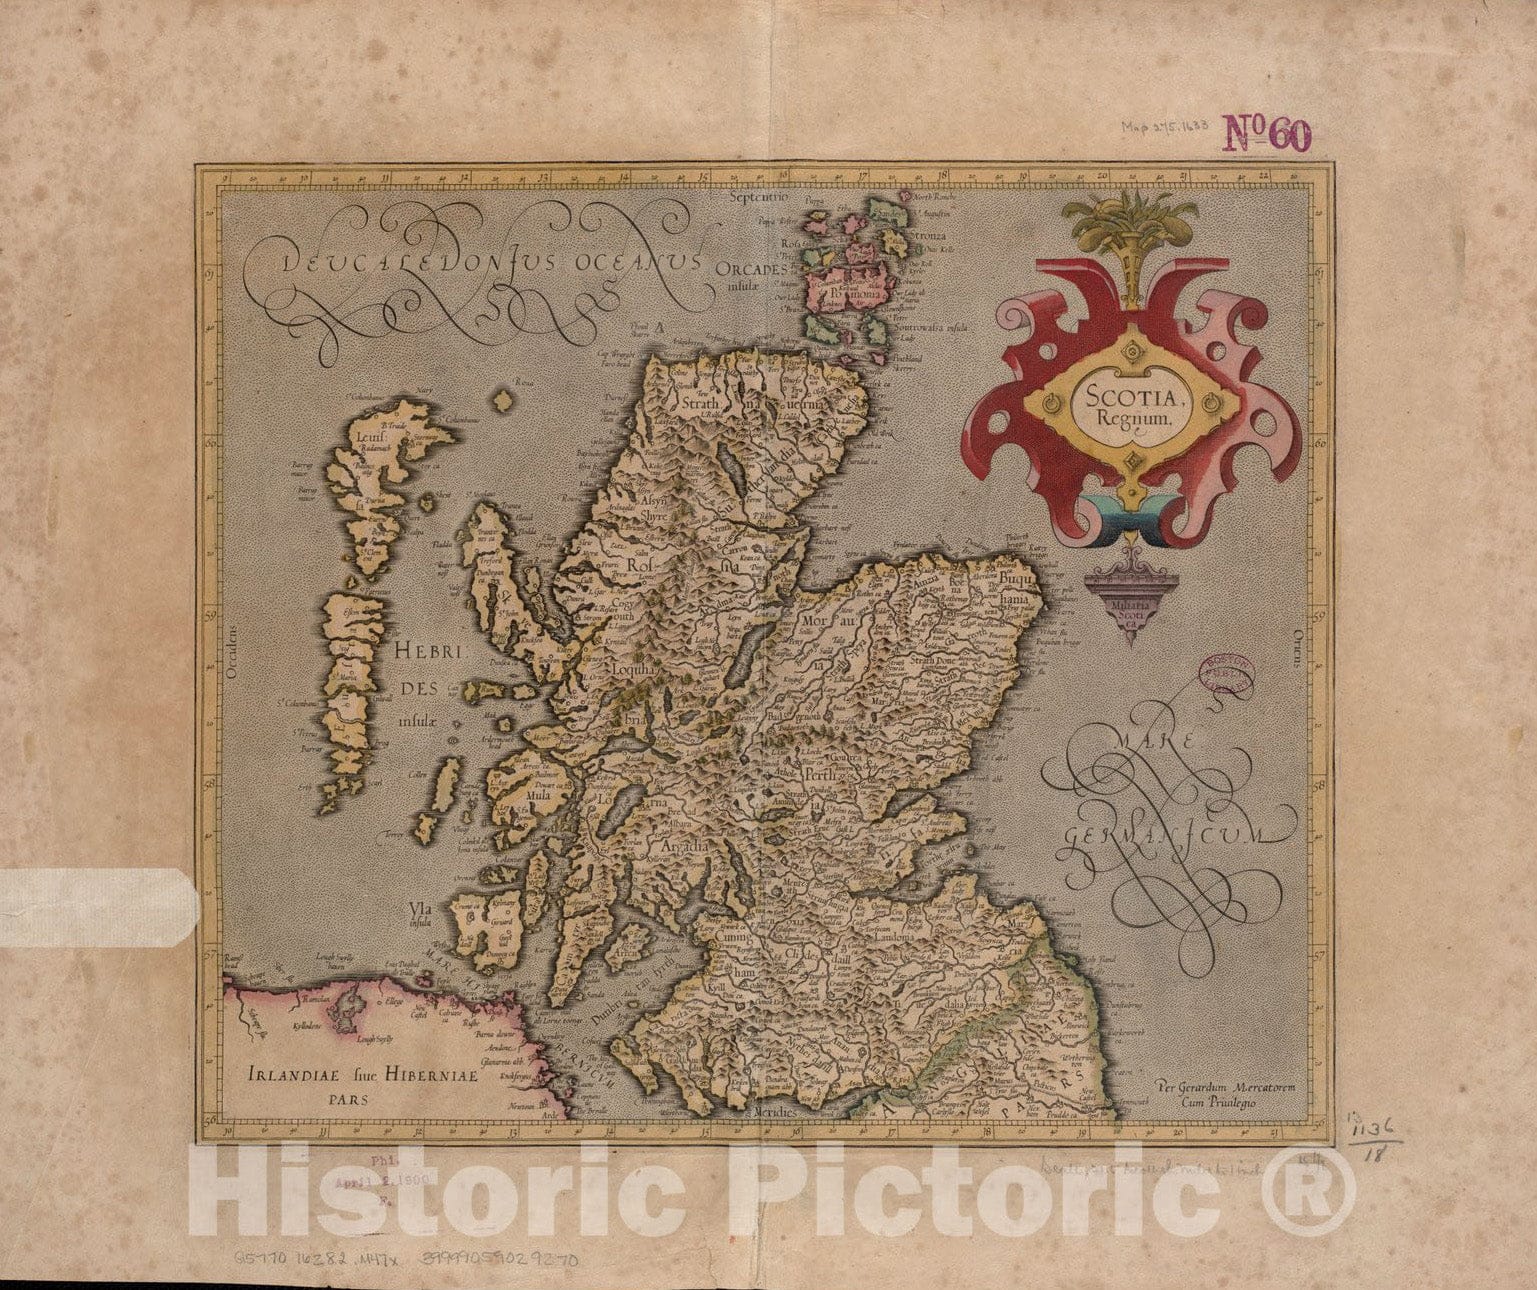 Historical Map, 1628-1633 Scotia Regnum, Vintage Wall Art